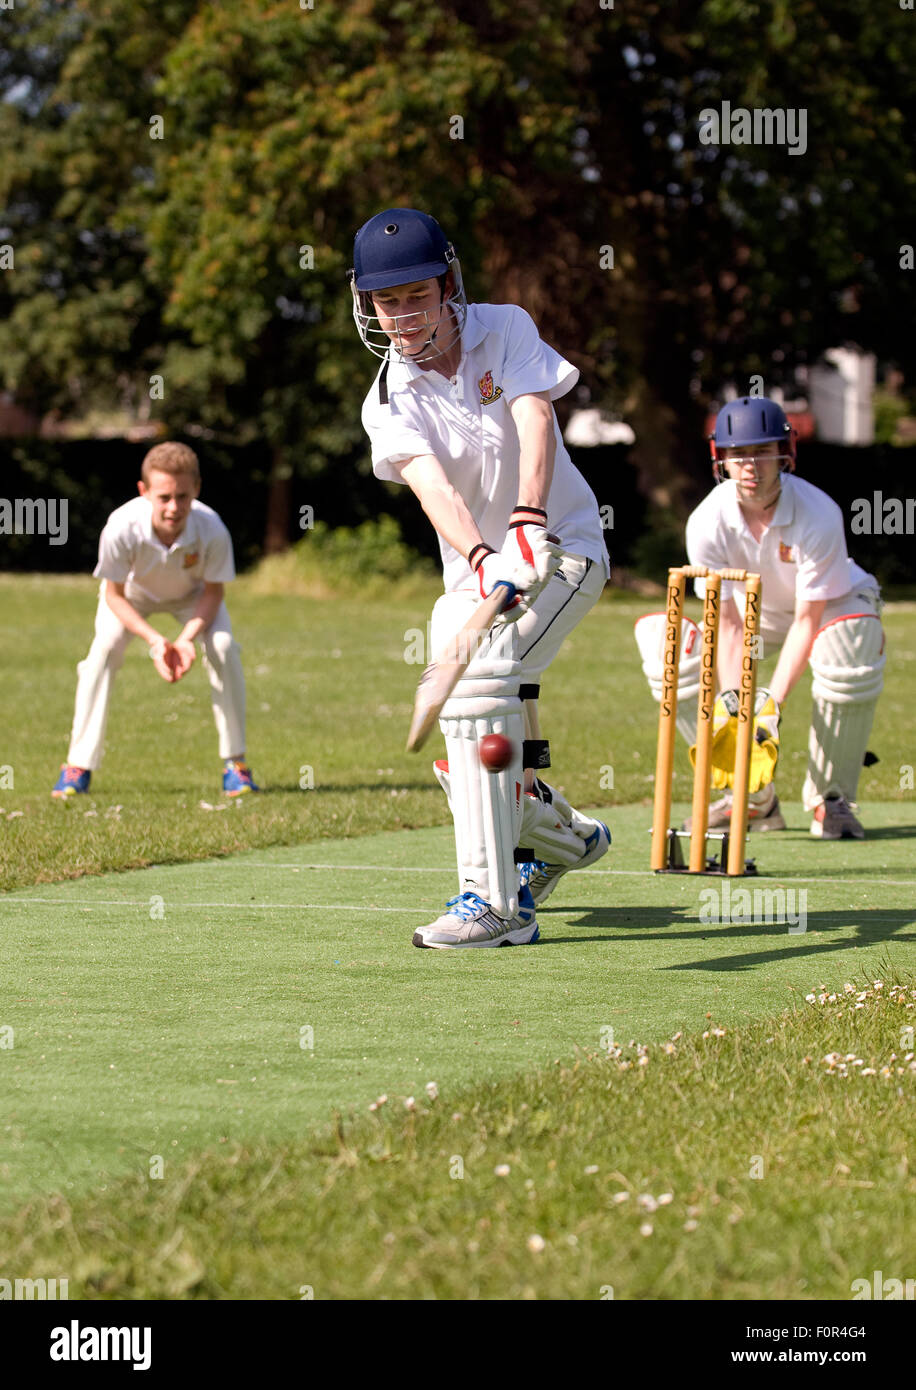 Secondary school pupils playing cricket, Surrey, UK Stock Photo